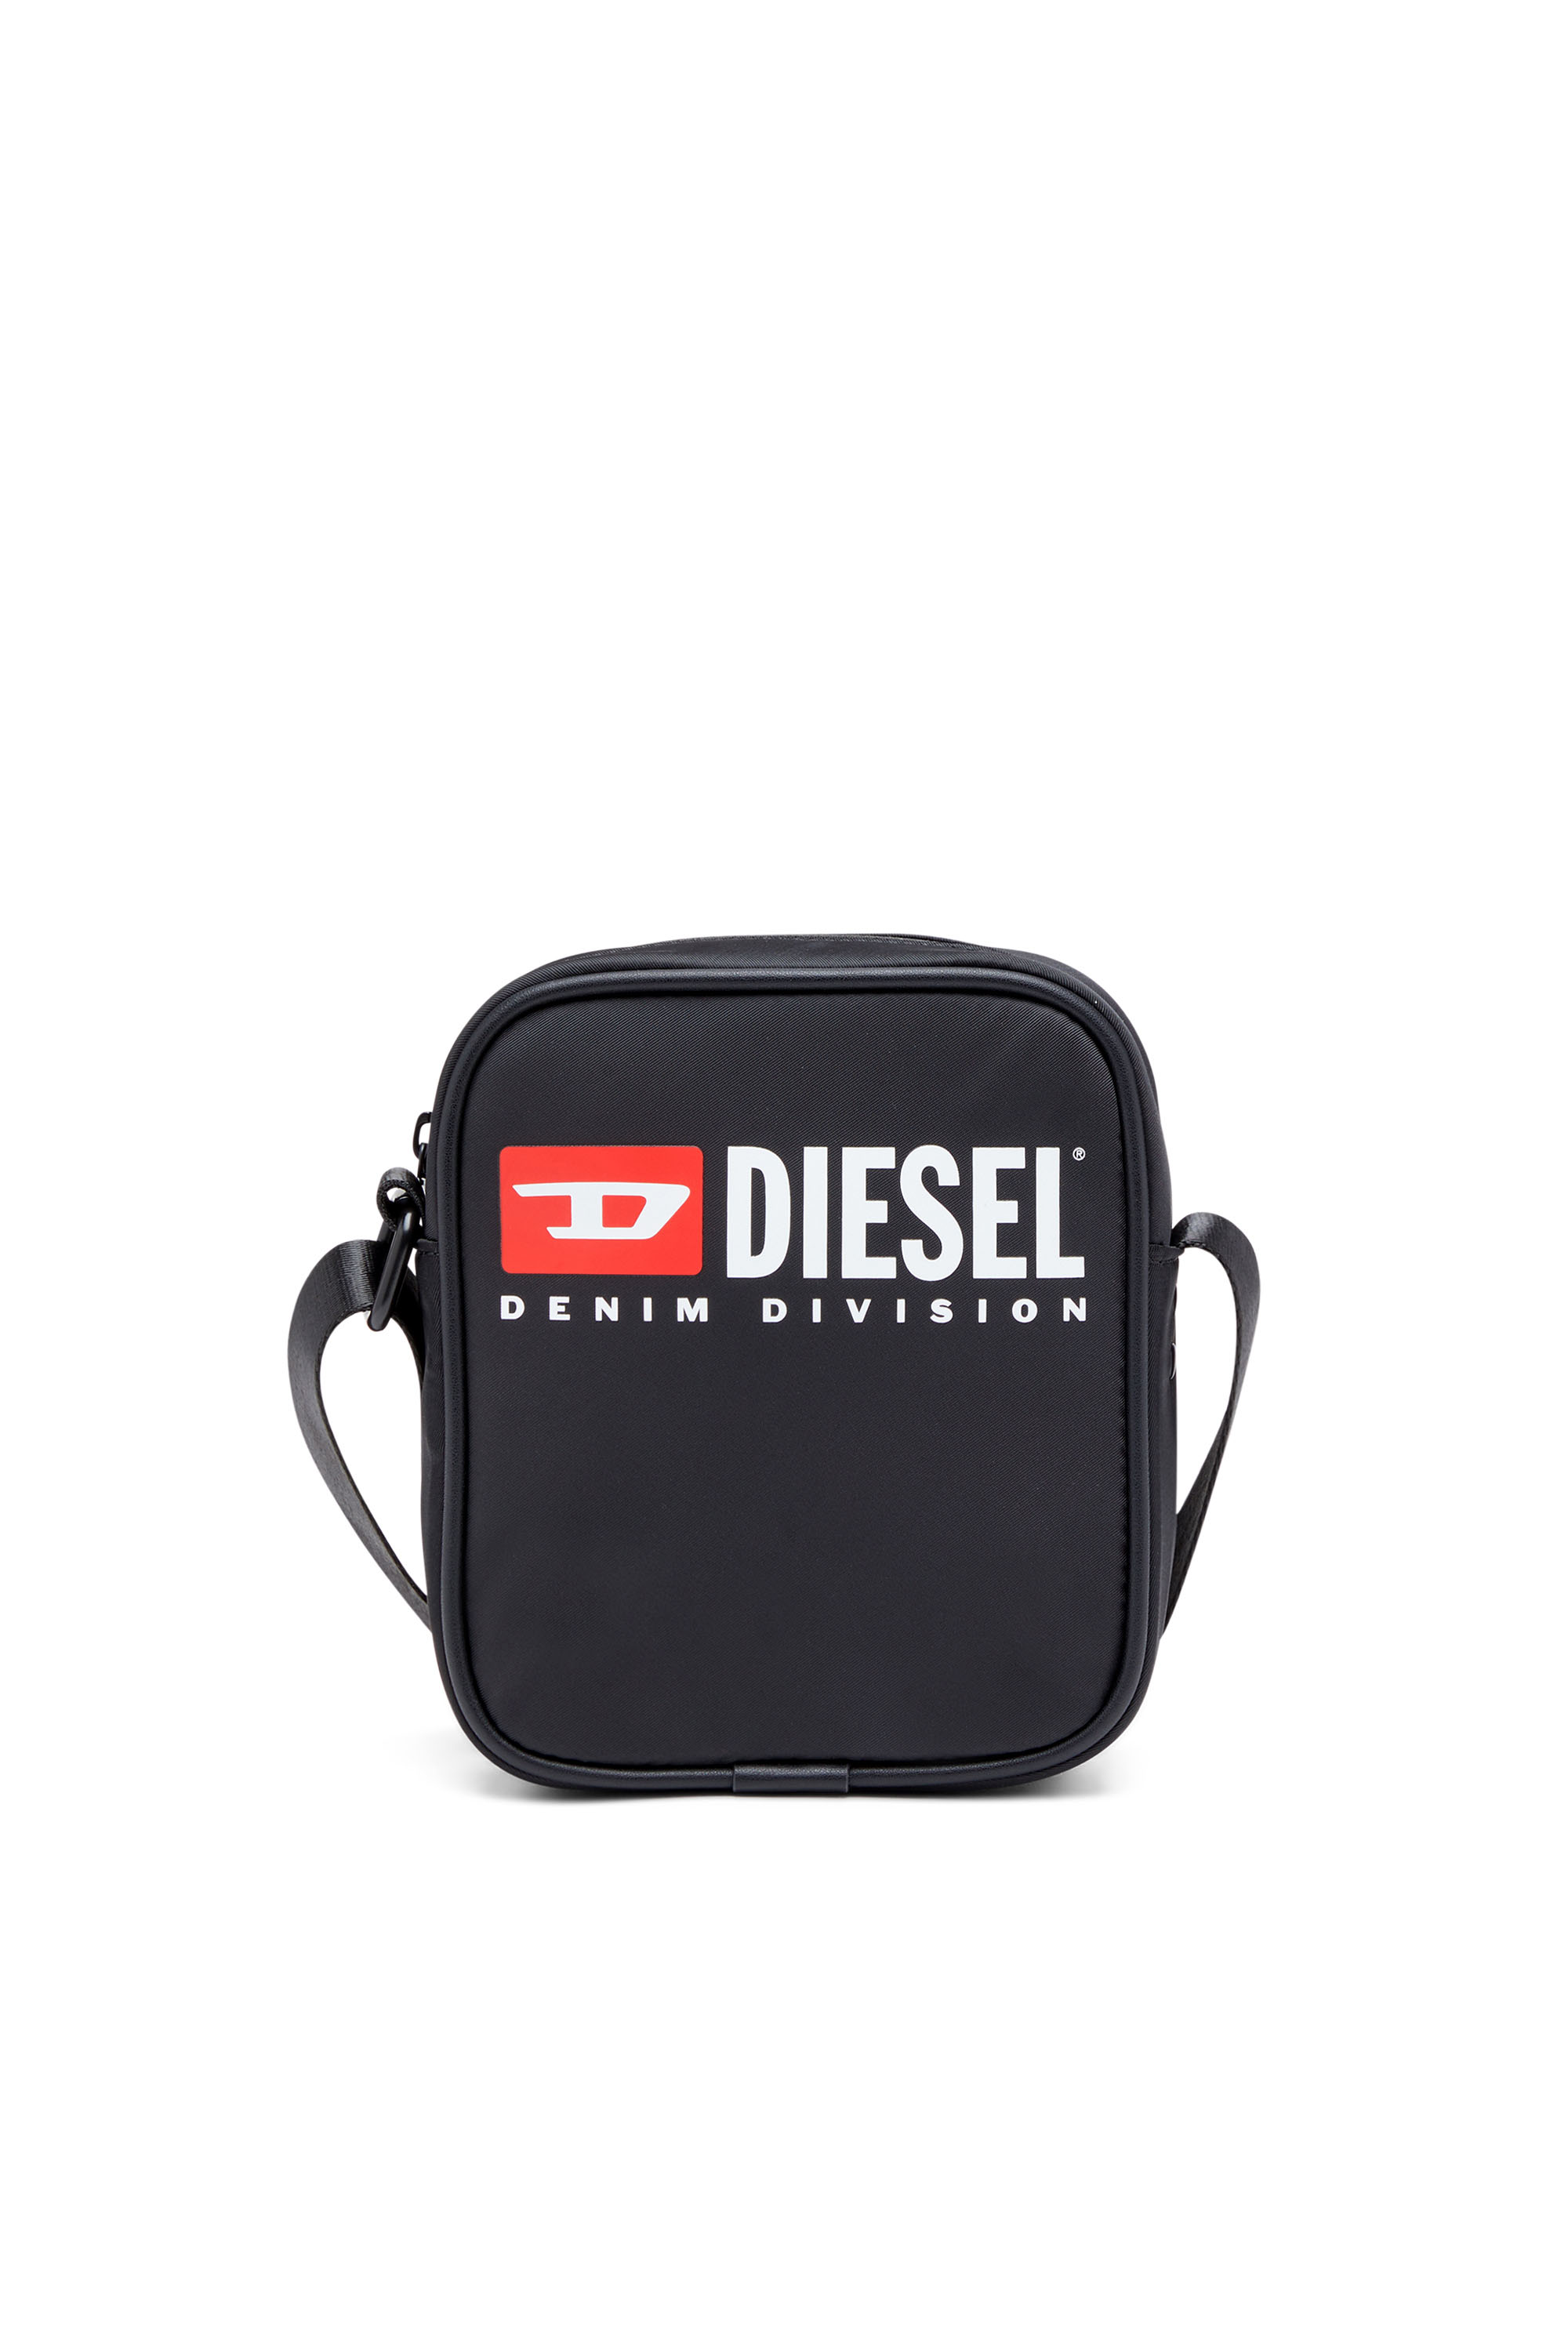 diesel ショルダーバックマチ幅6㎝ - ショルダーバッグ